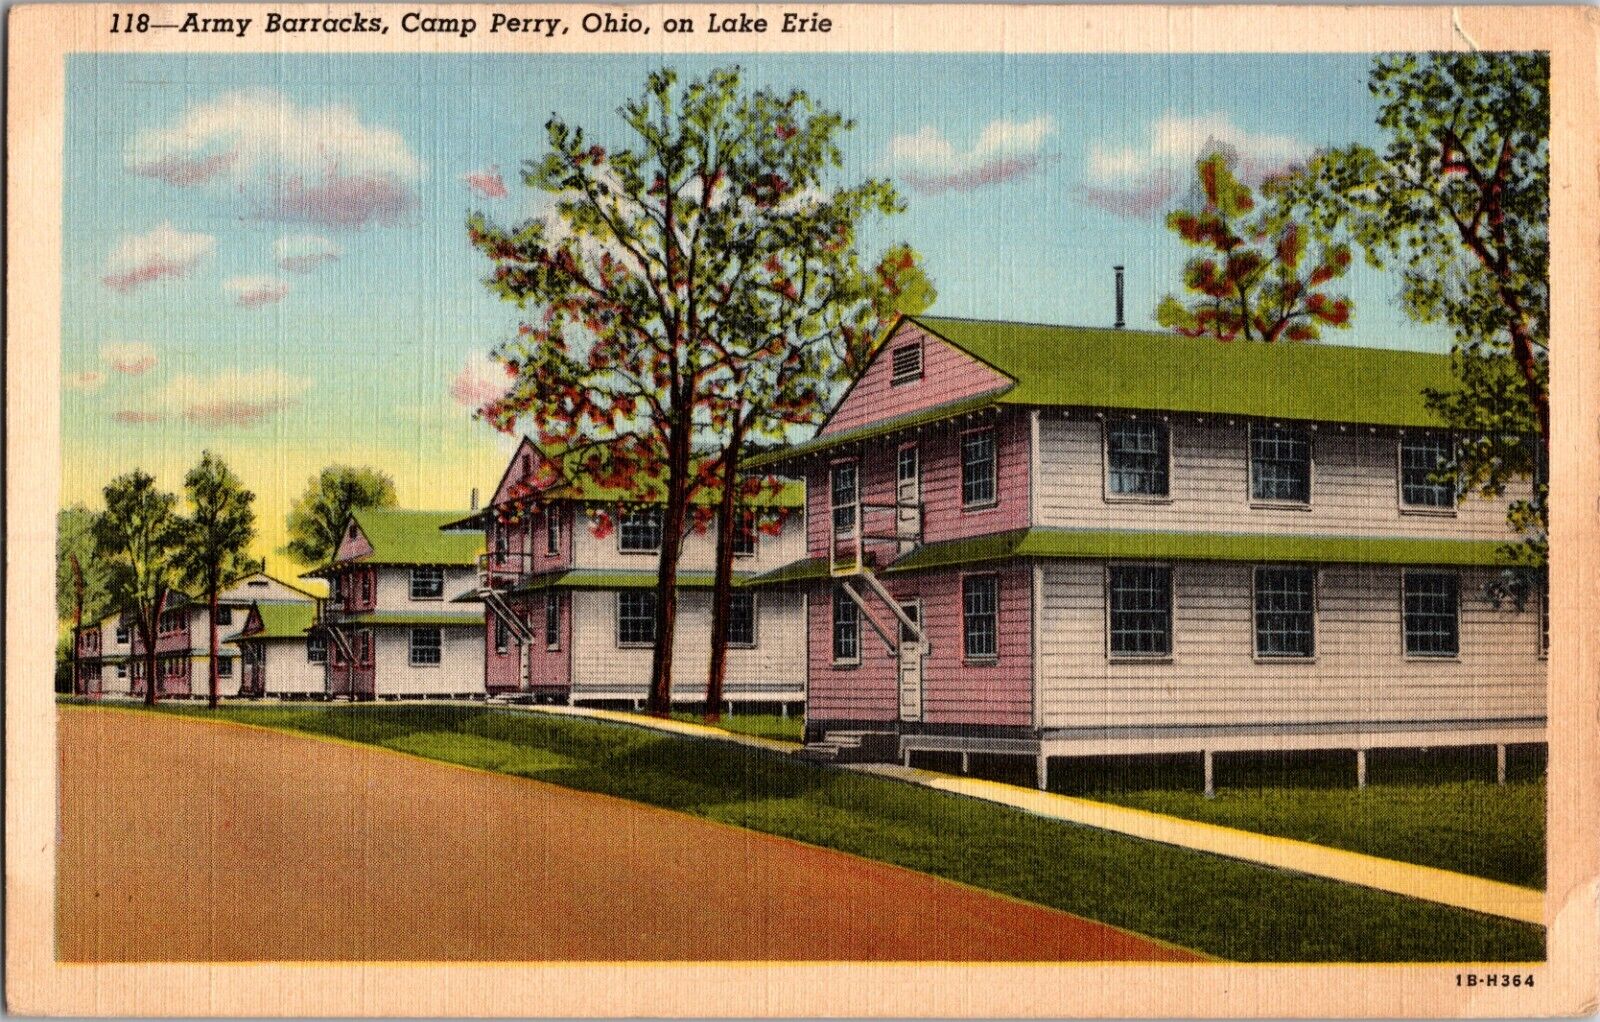 c. 1950 Vintage Postcard Army Barracks Camp Perry Ohio on Lake Erie